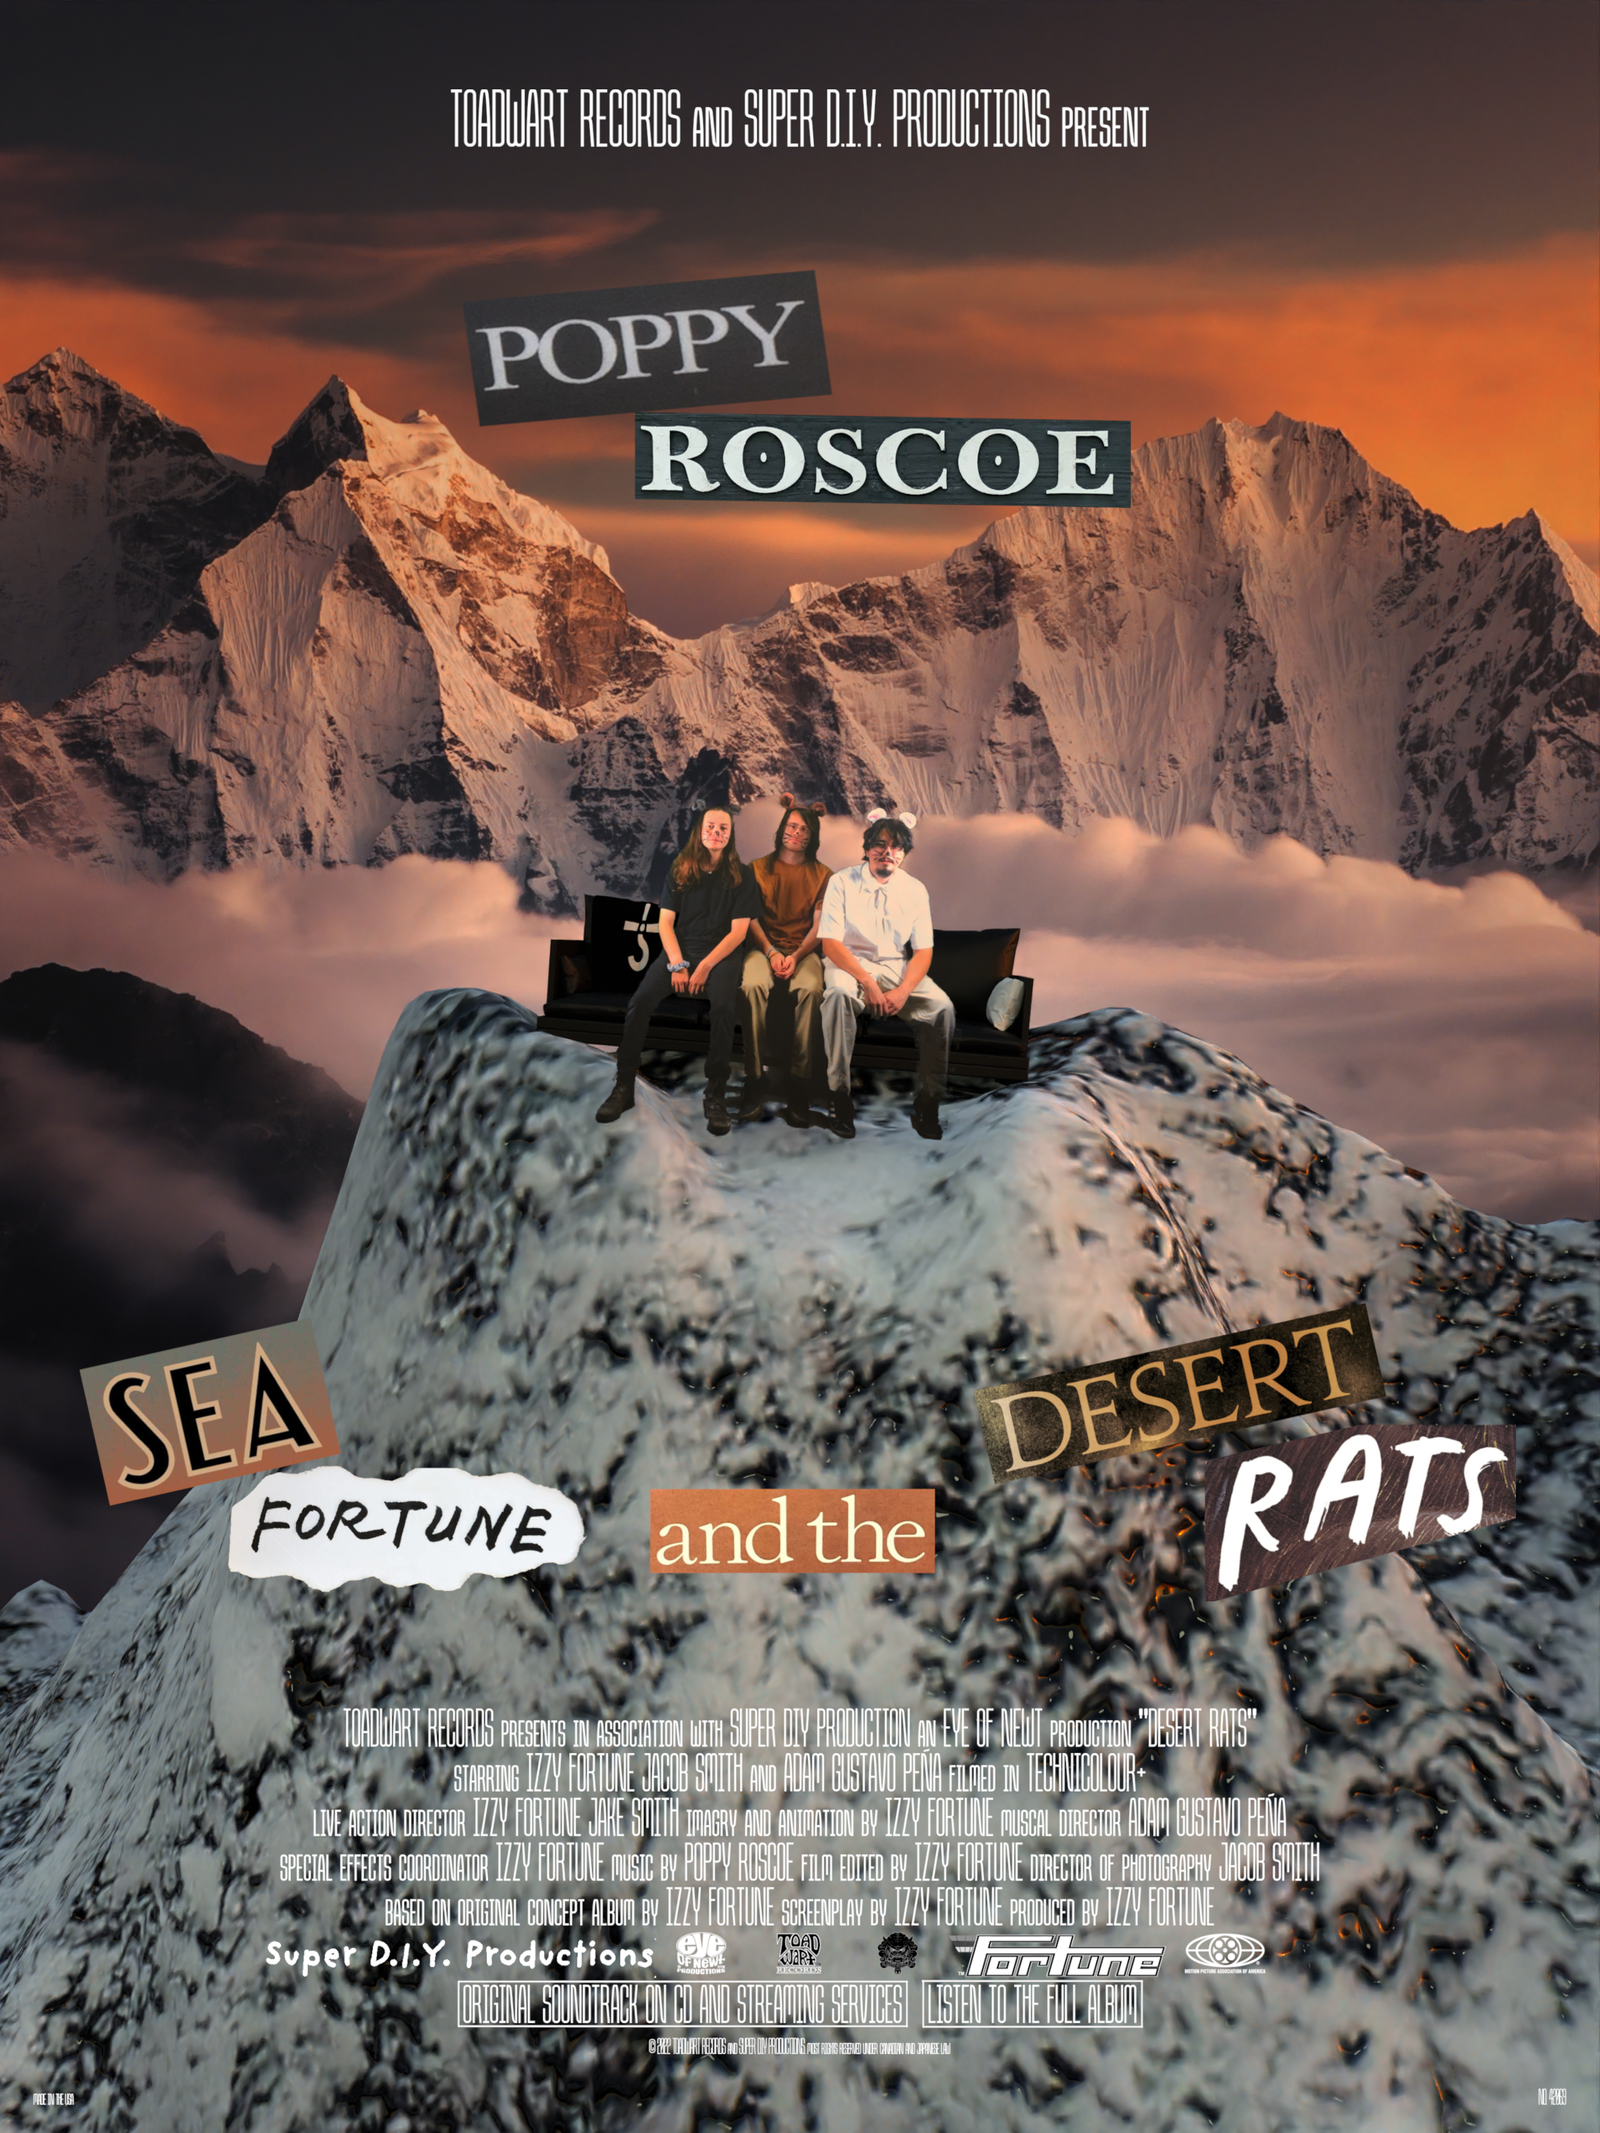 POPPY ROSCOE releasing Poppy Roscoe in: Sea Fortune and the Desert Rats